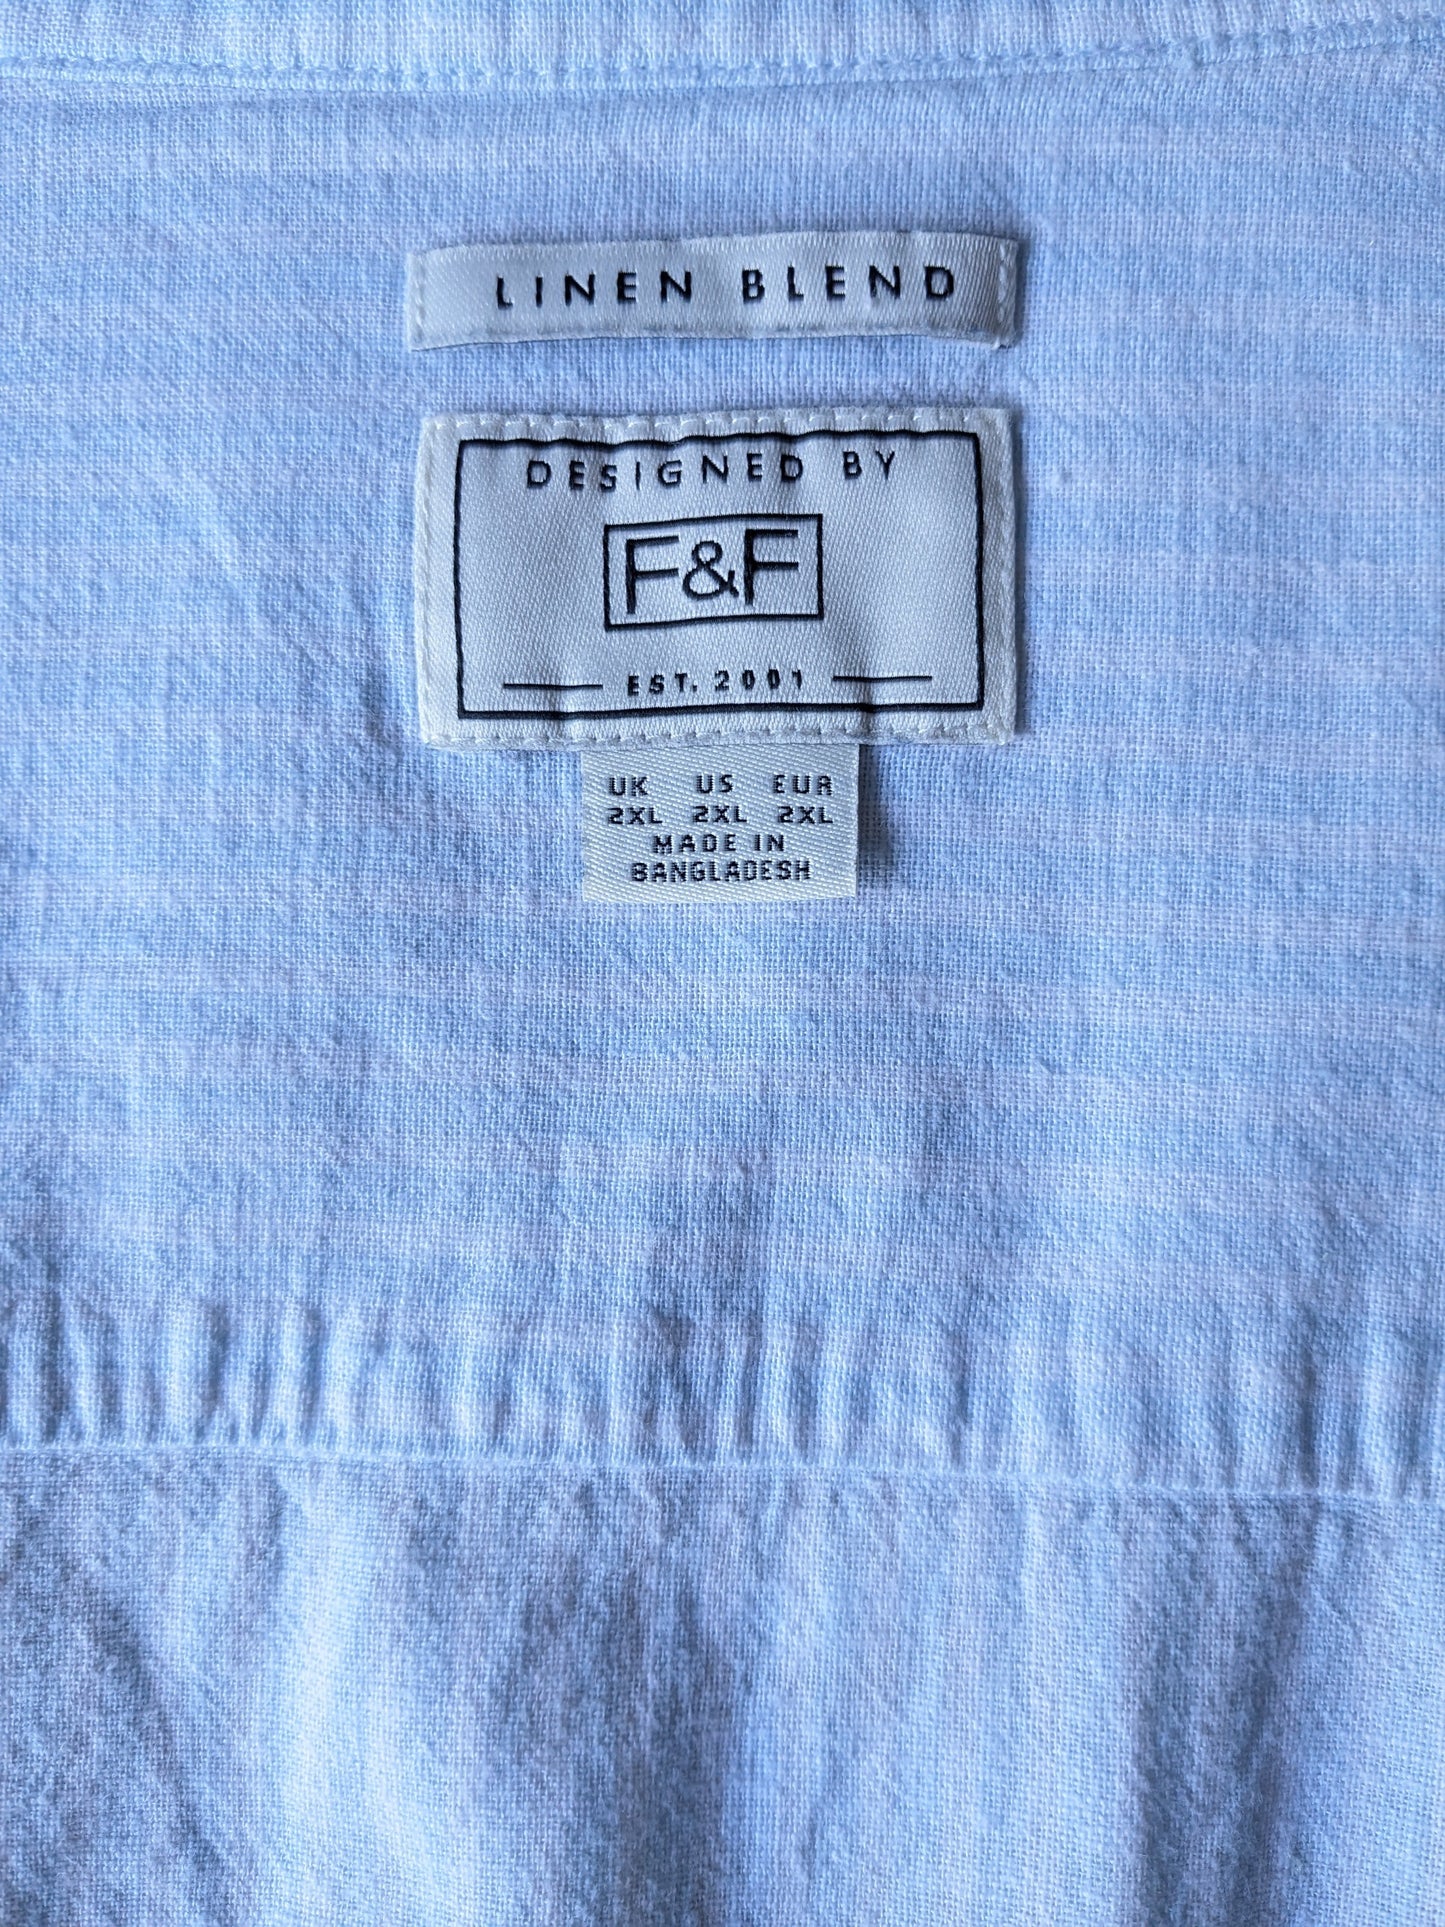 Chemise en lin F&F avec col court. Blanc bleu rayé. Taille xxl / 2xl.